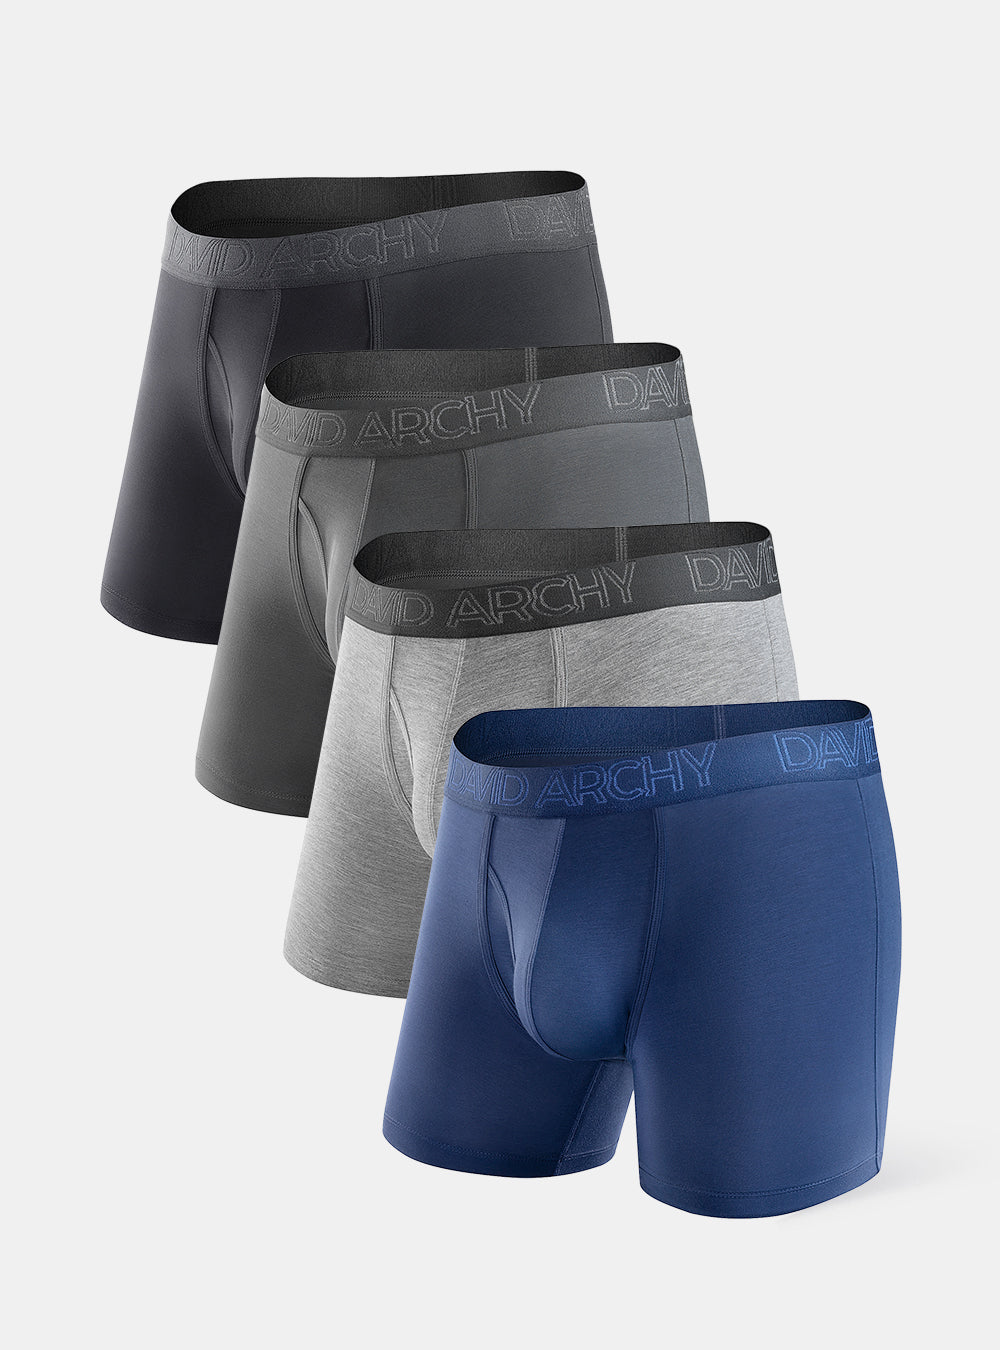 BAMBOO COOL Men's Underwear Briefs Coverd Waistband Comfort Soft Underwear  with Contour Pouch Briefs Pack